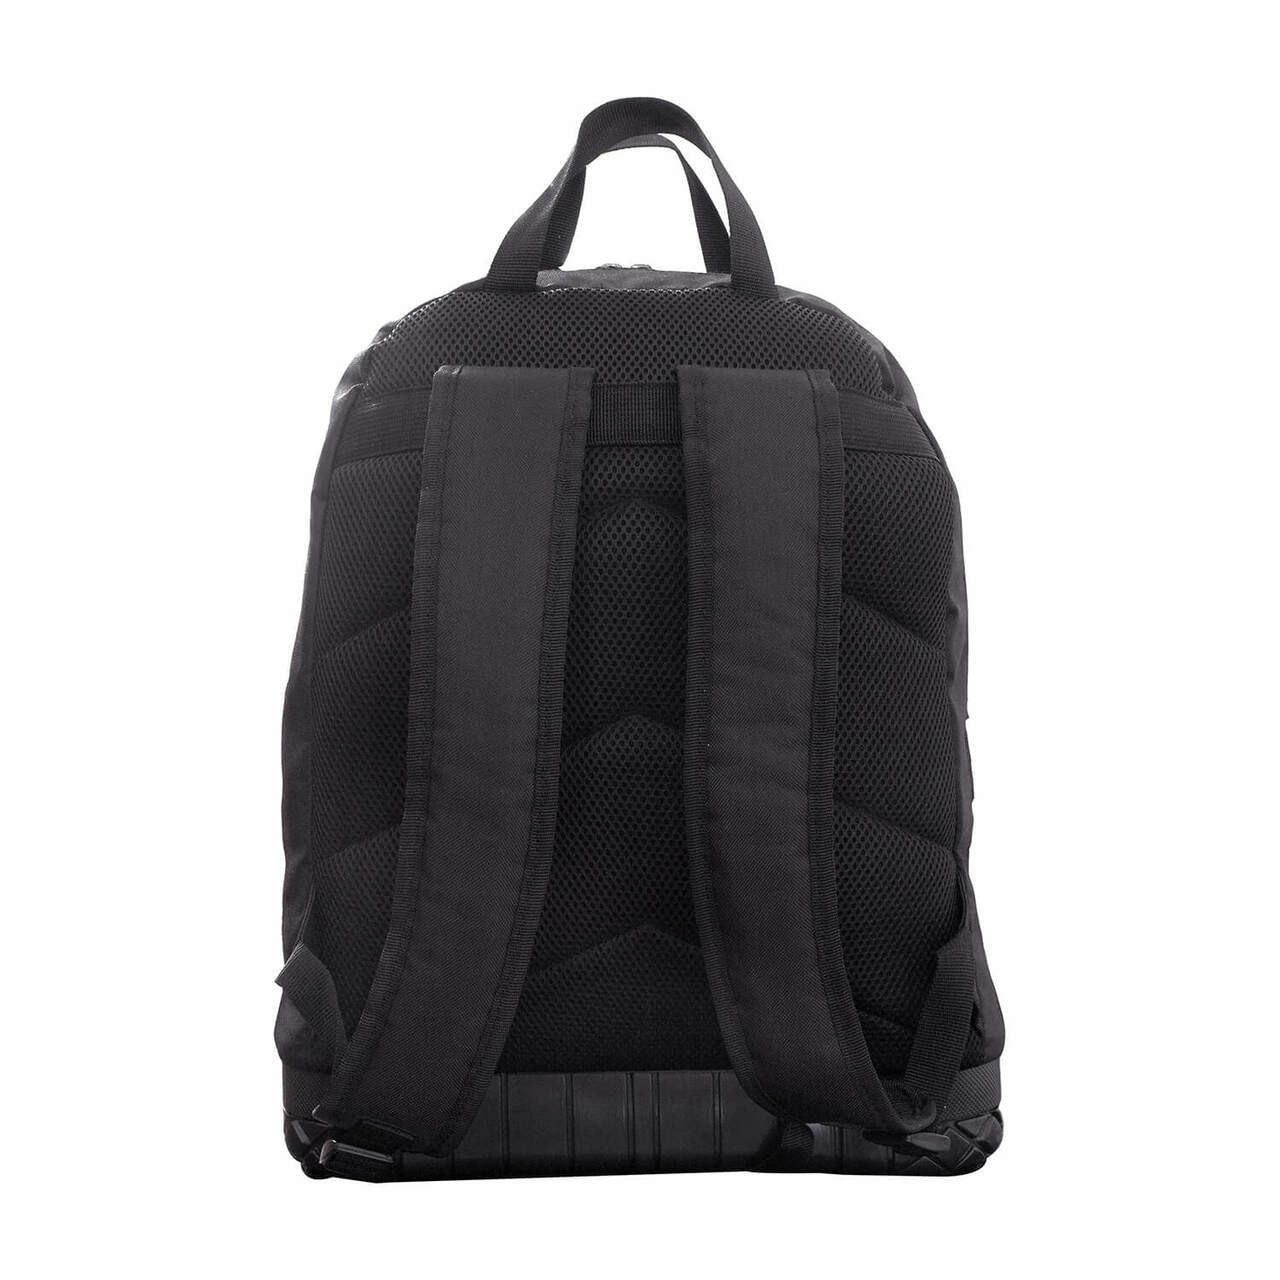 Oakland Athletics Tool Bag Backpack